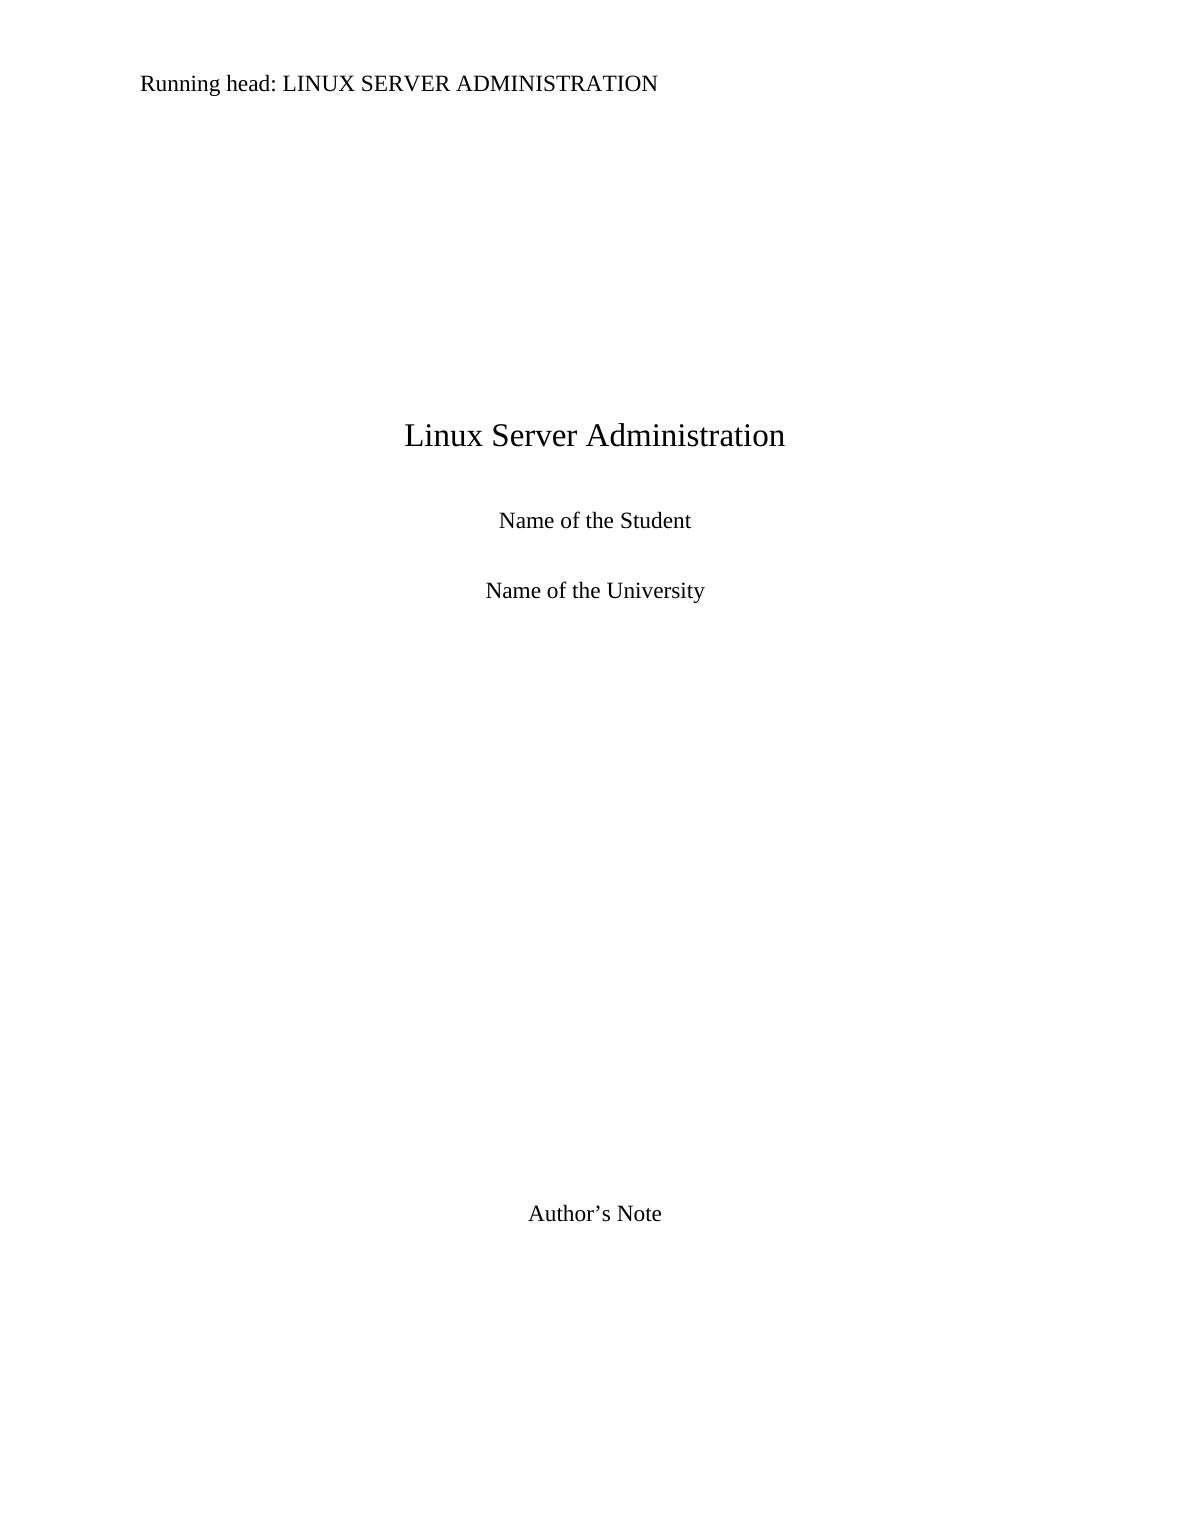 Linux Server Administration Assignment_1